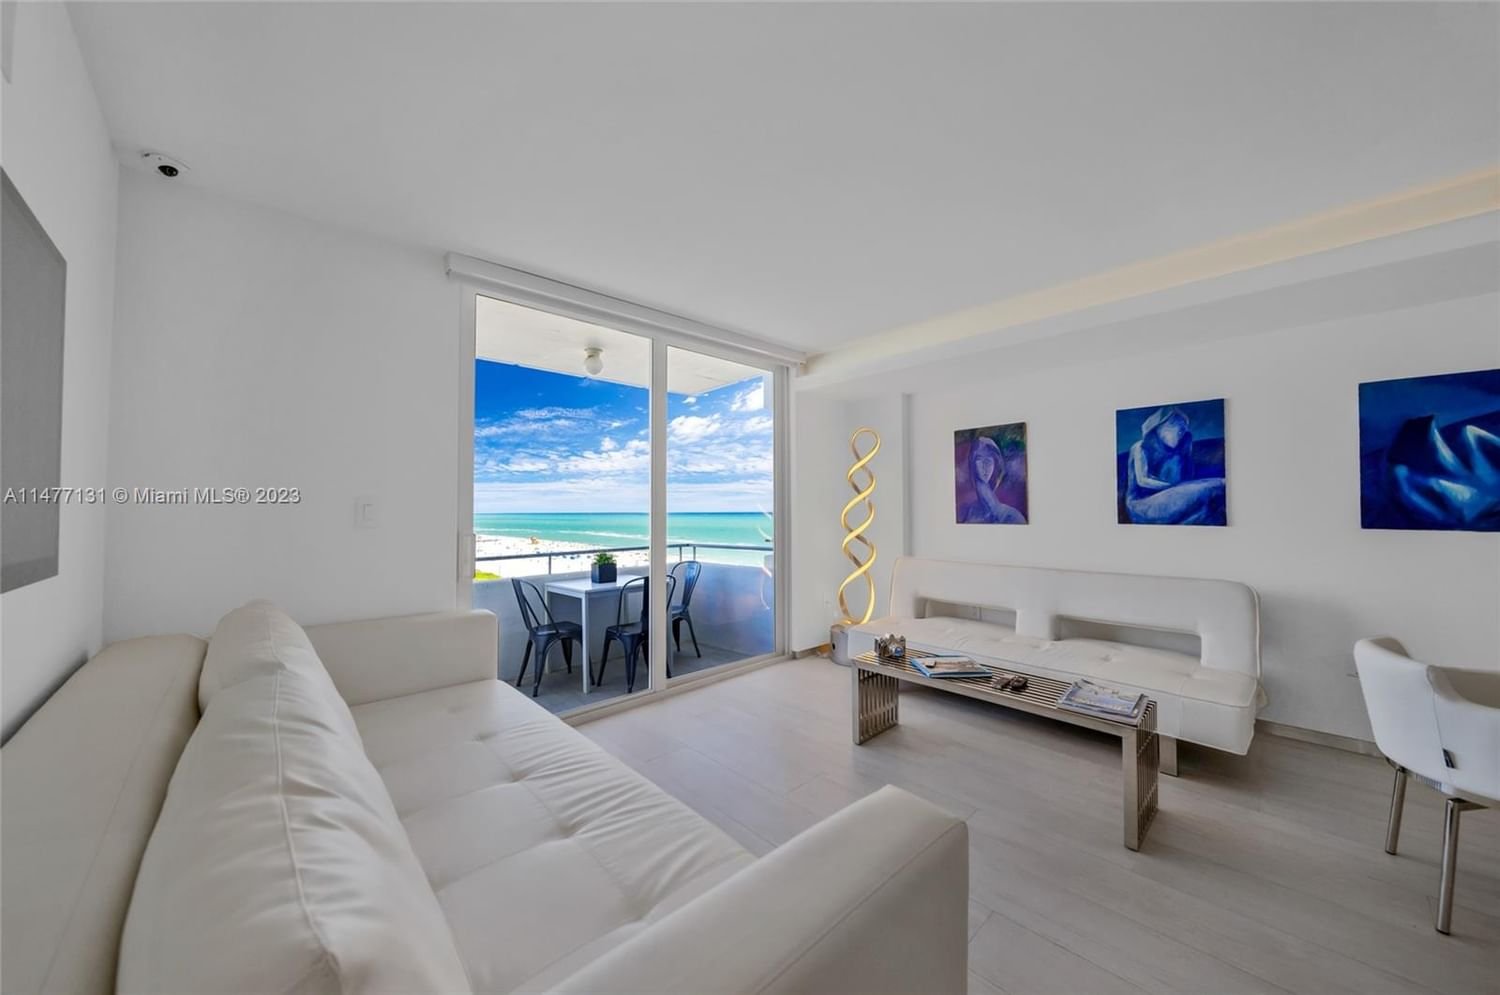 Real estate property located at 465 Ocean Dr #1020, Miami-Dade County, ROYAL ATLANTIC CONDO, Miami Beach, FL